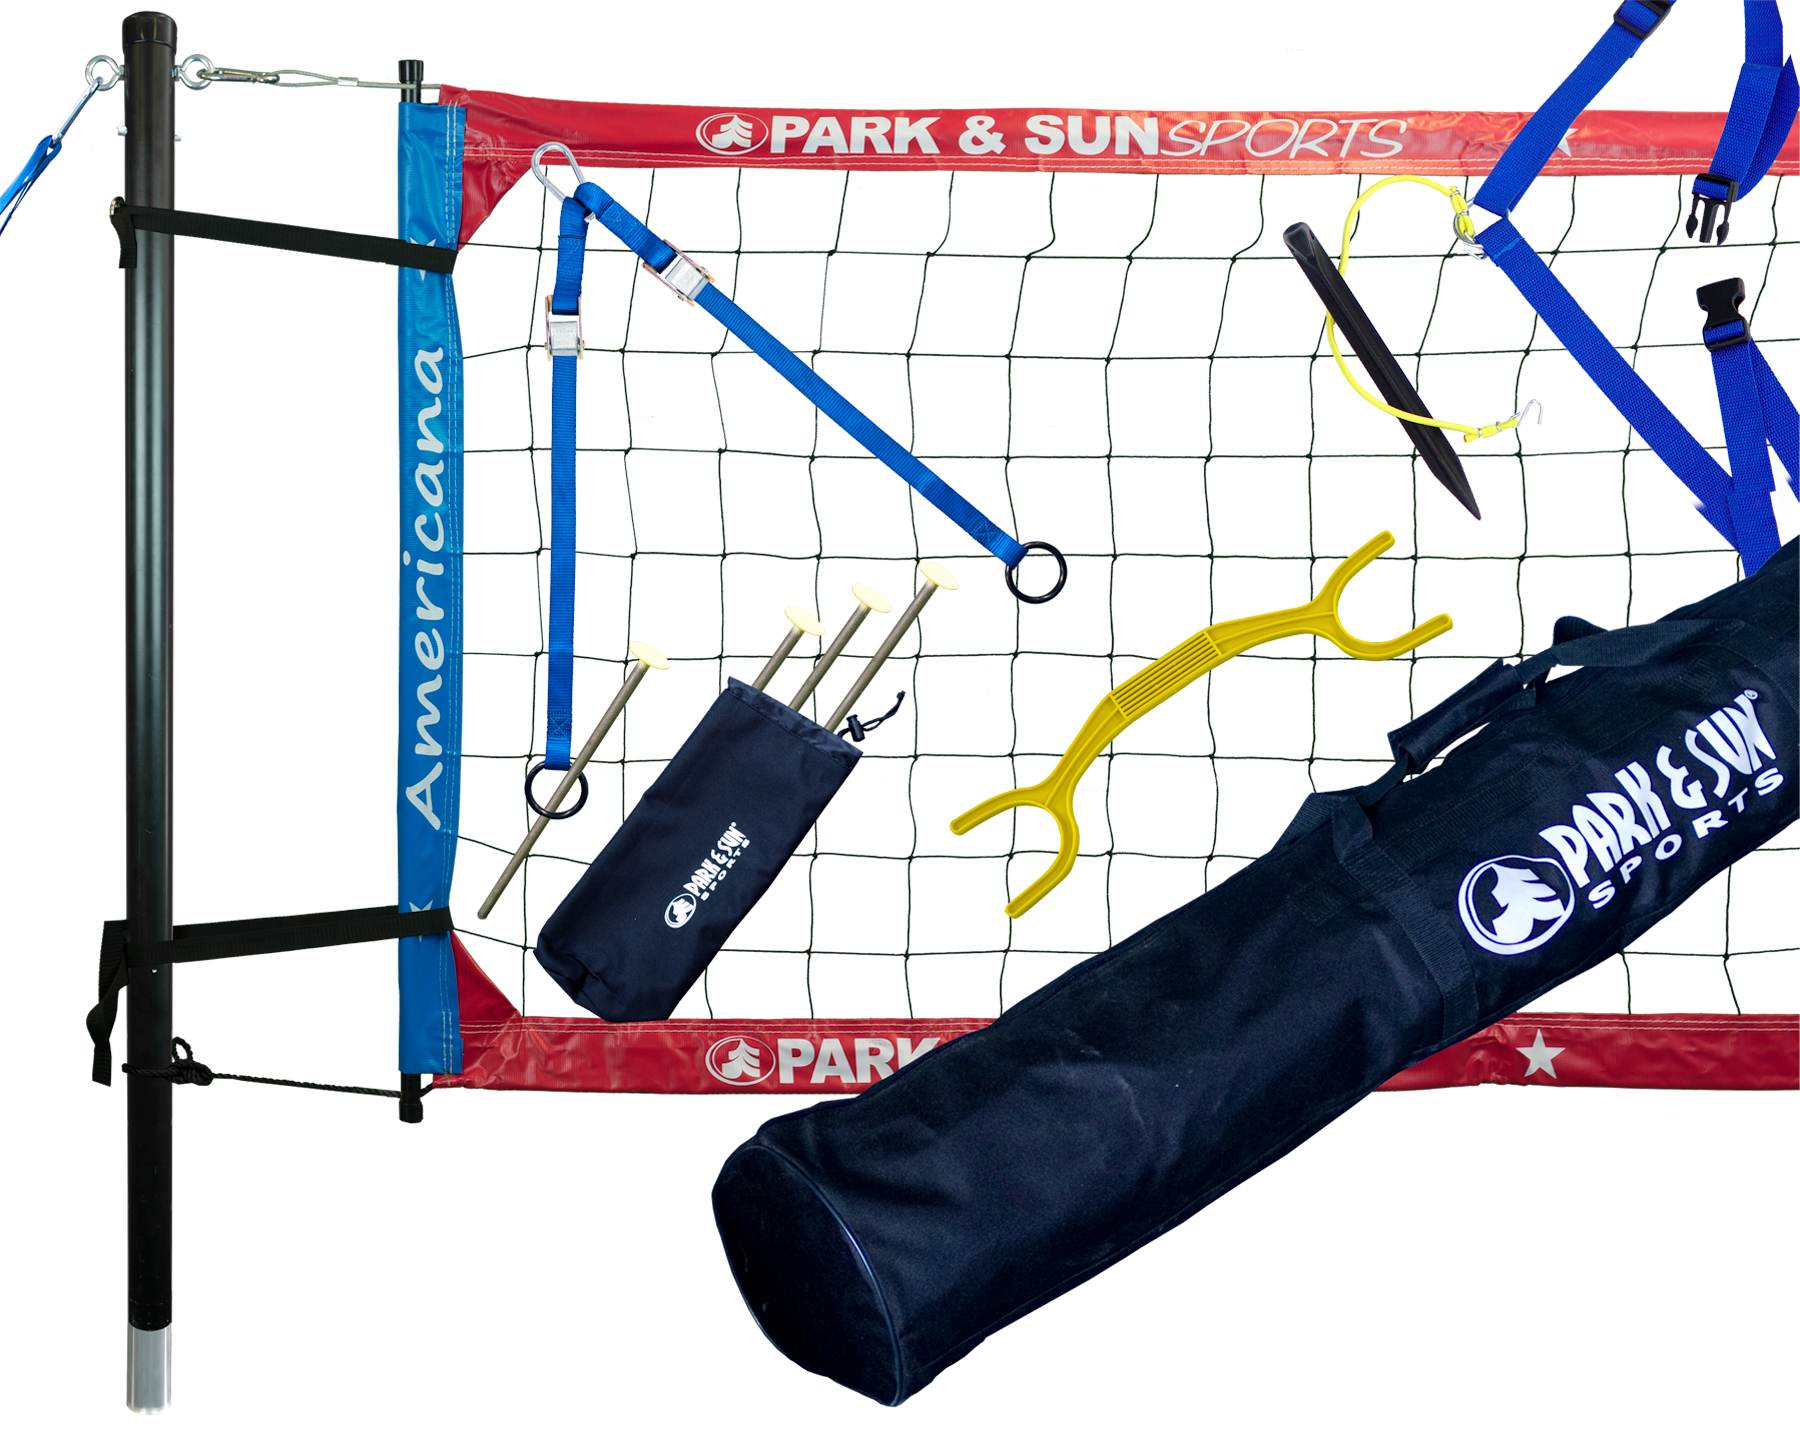 Park Sun Volleyball Net Systems Comparison Chart